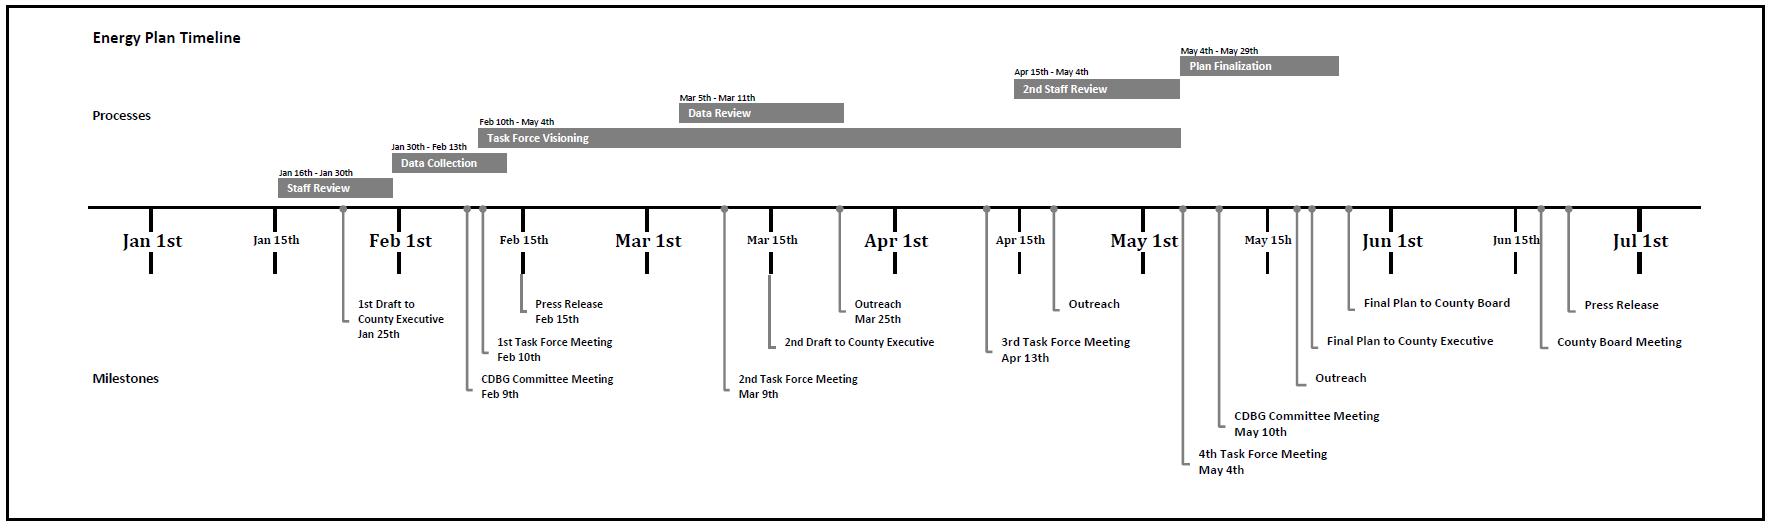 Timeline for Energy Plan Meetings